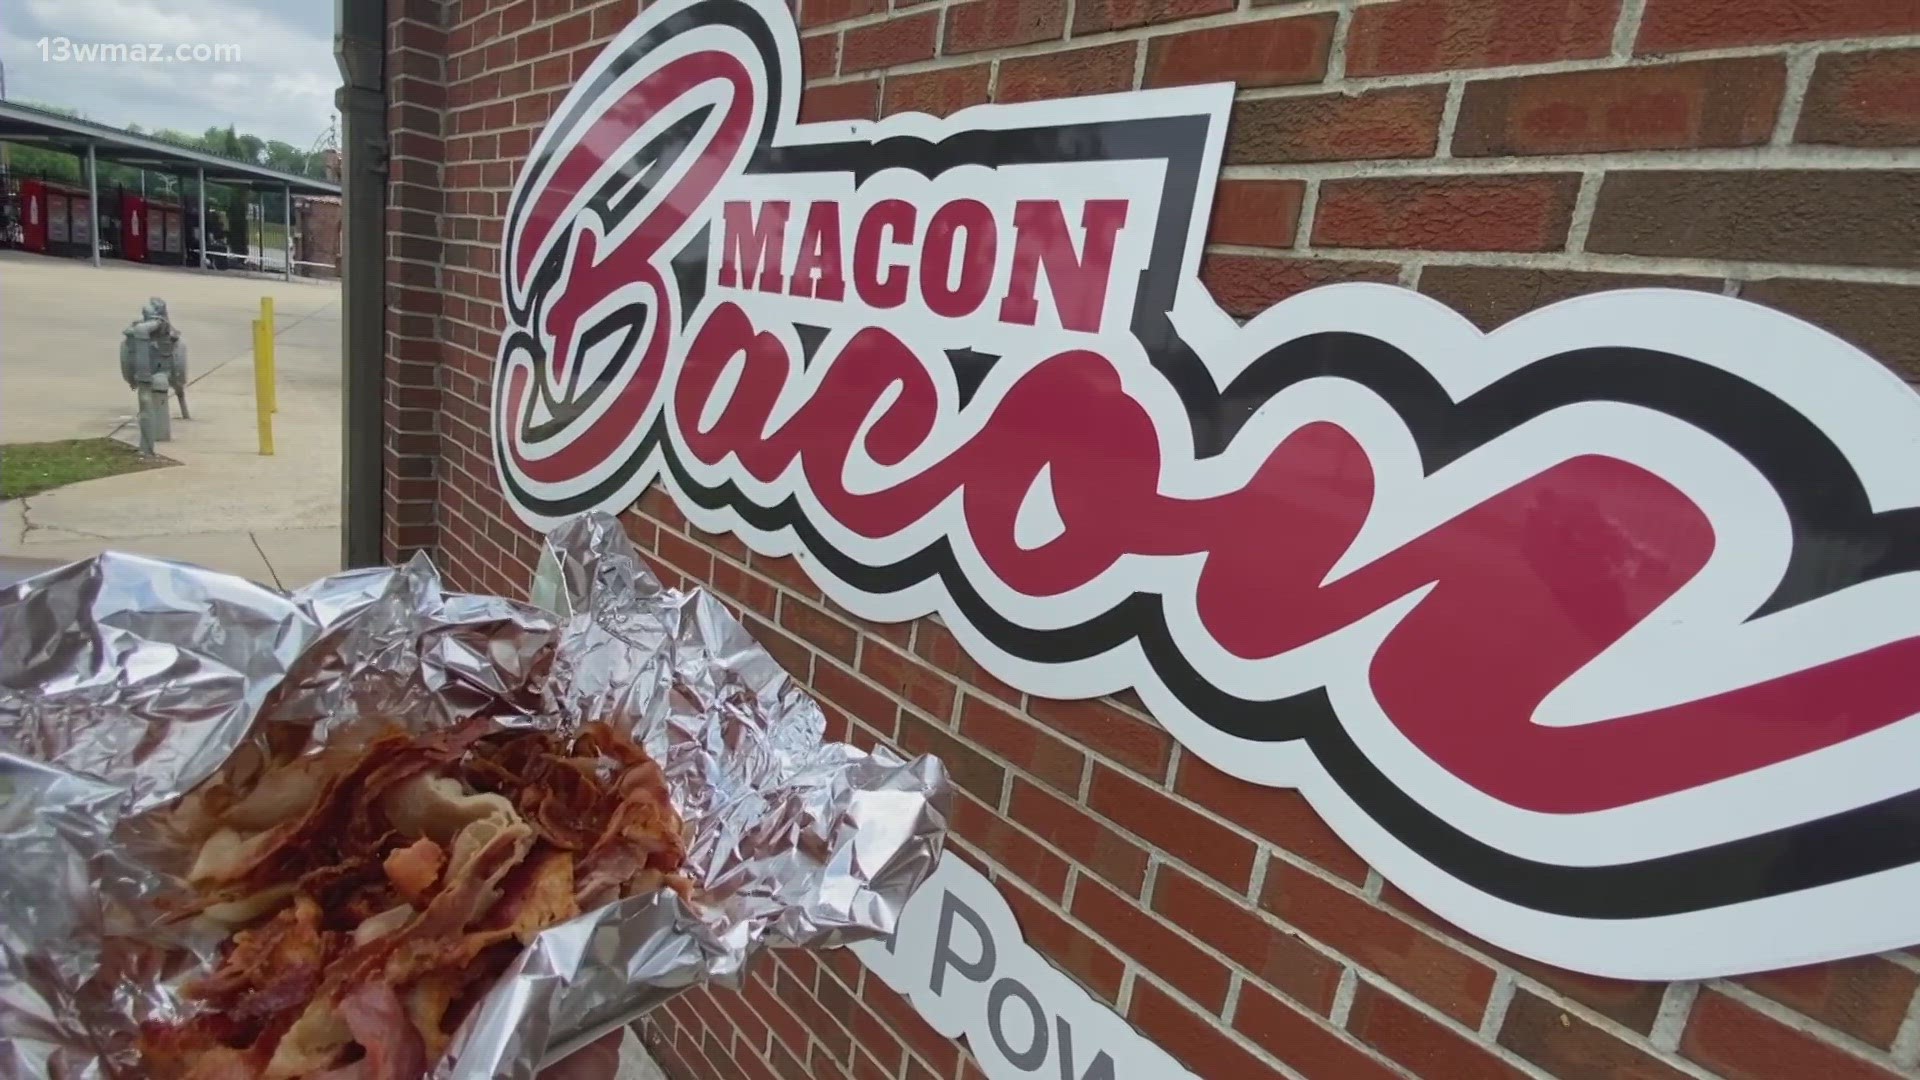 The bacon-filled fun run starts this Saturday at 9 a.m.